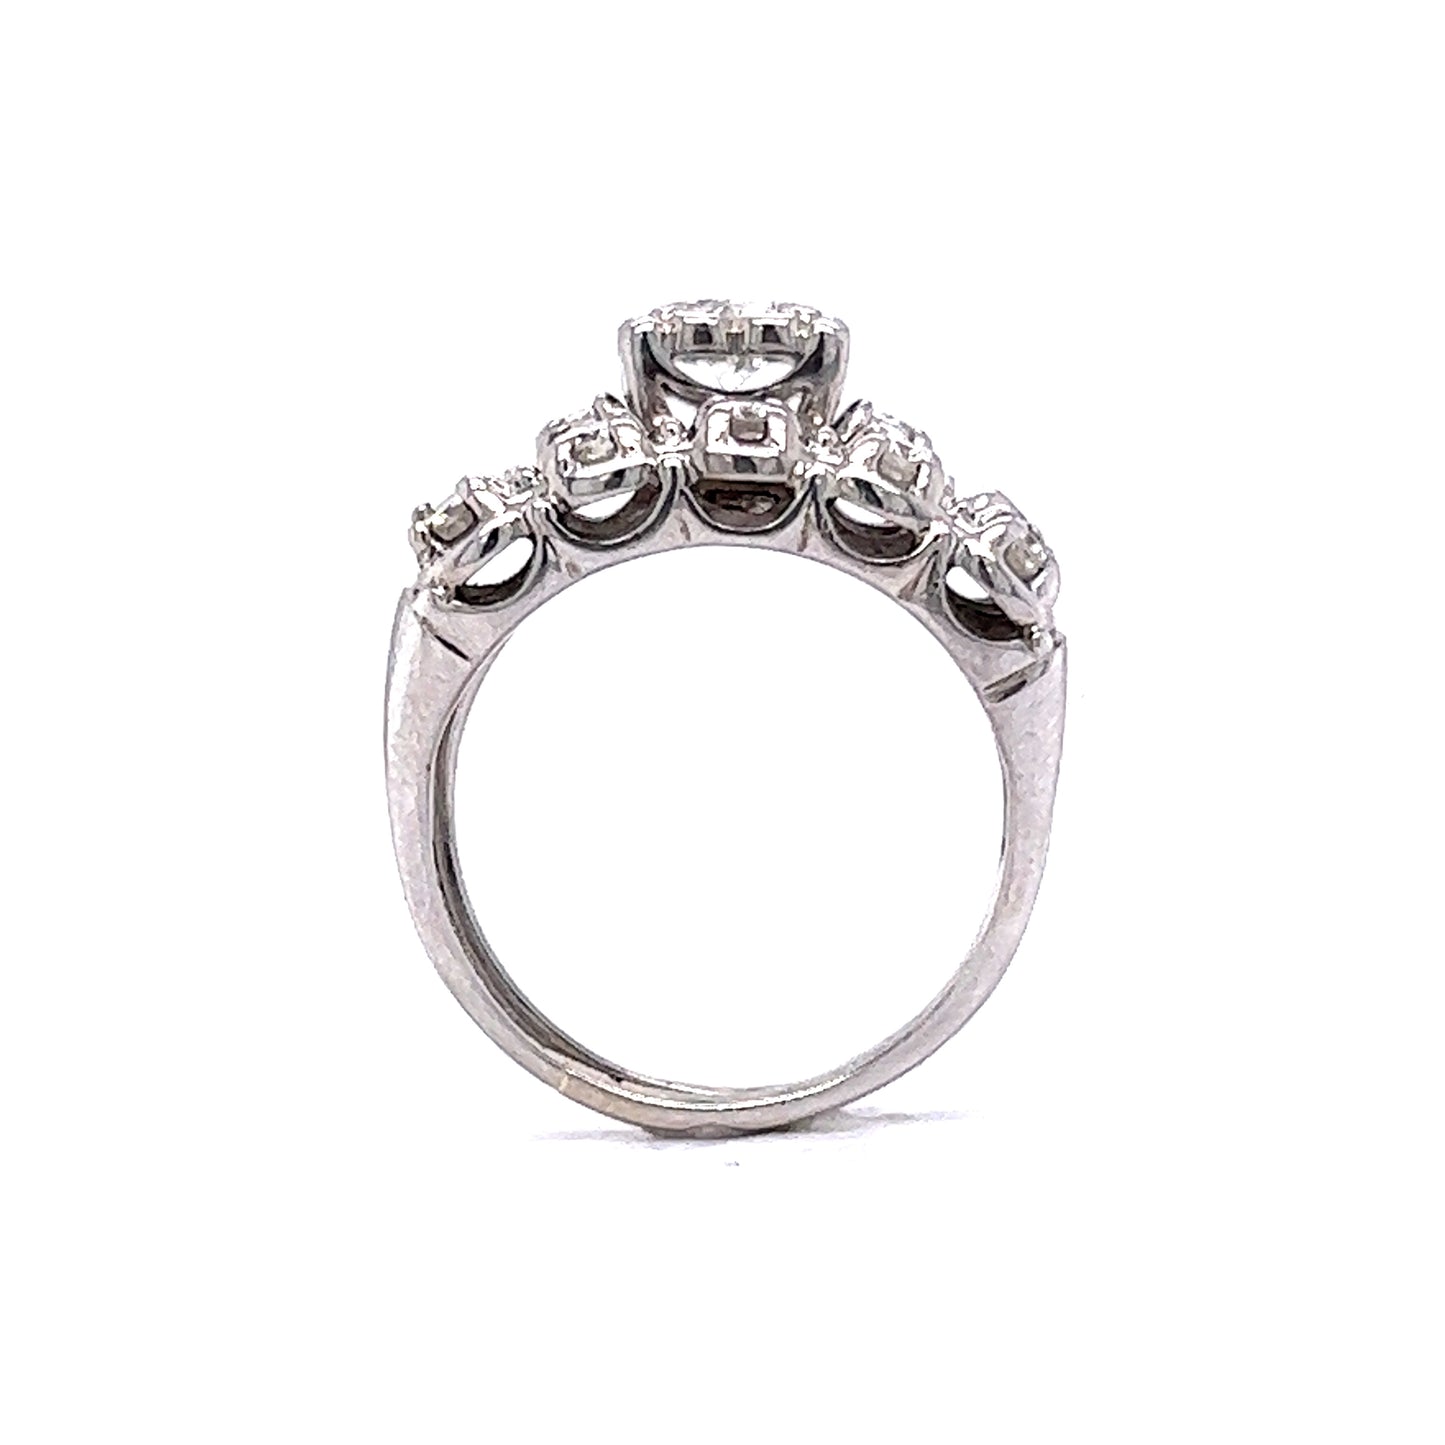 .30 Mid-Century Diamond Engagement & Wedding Ring Set in 14k